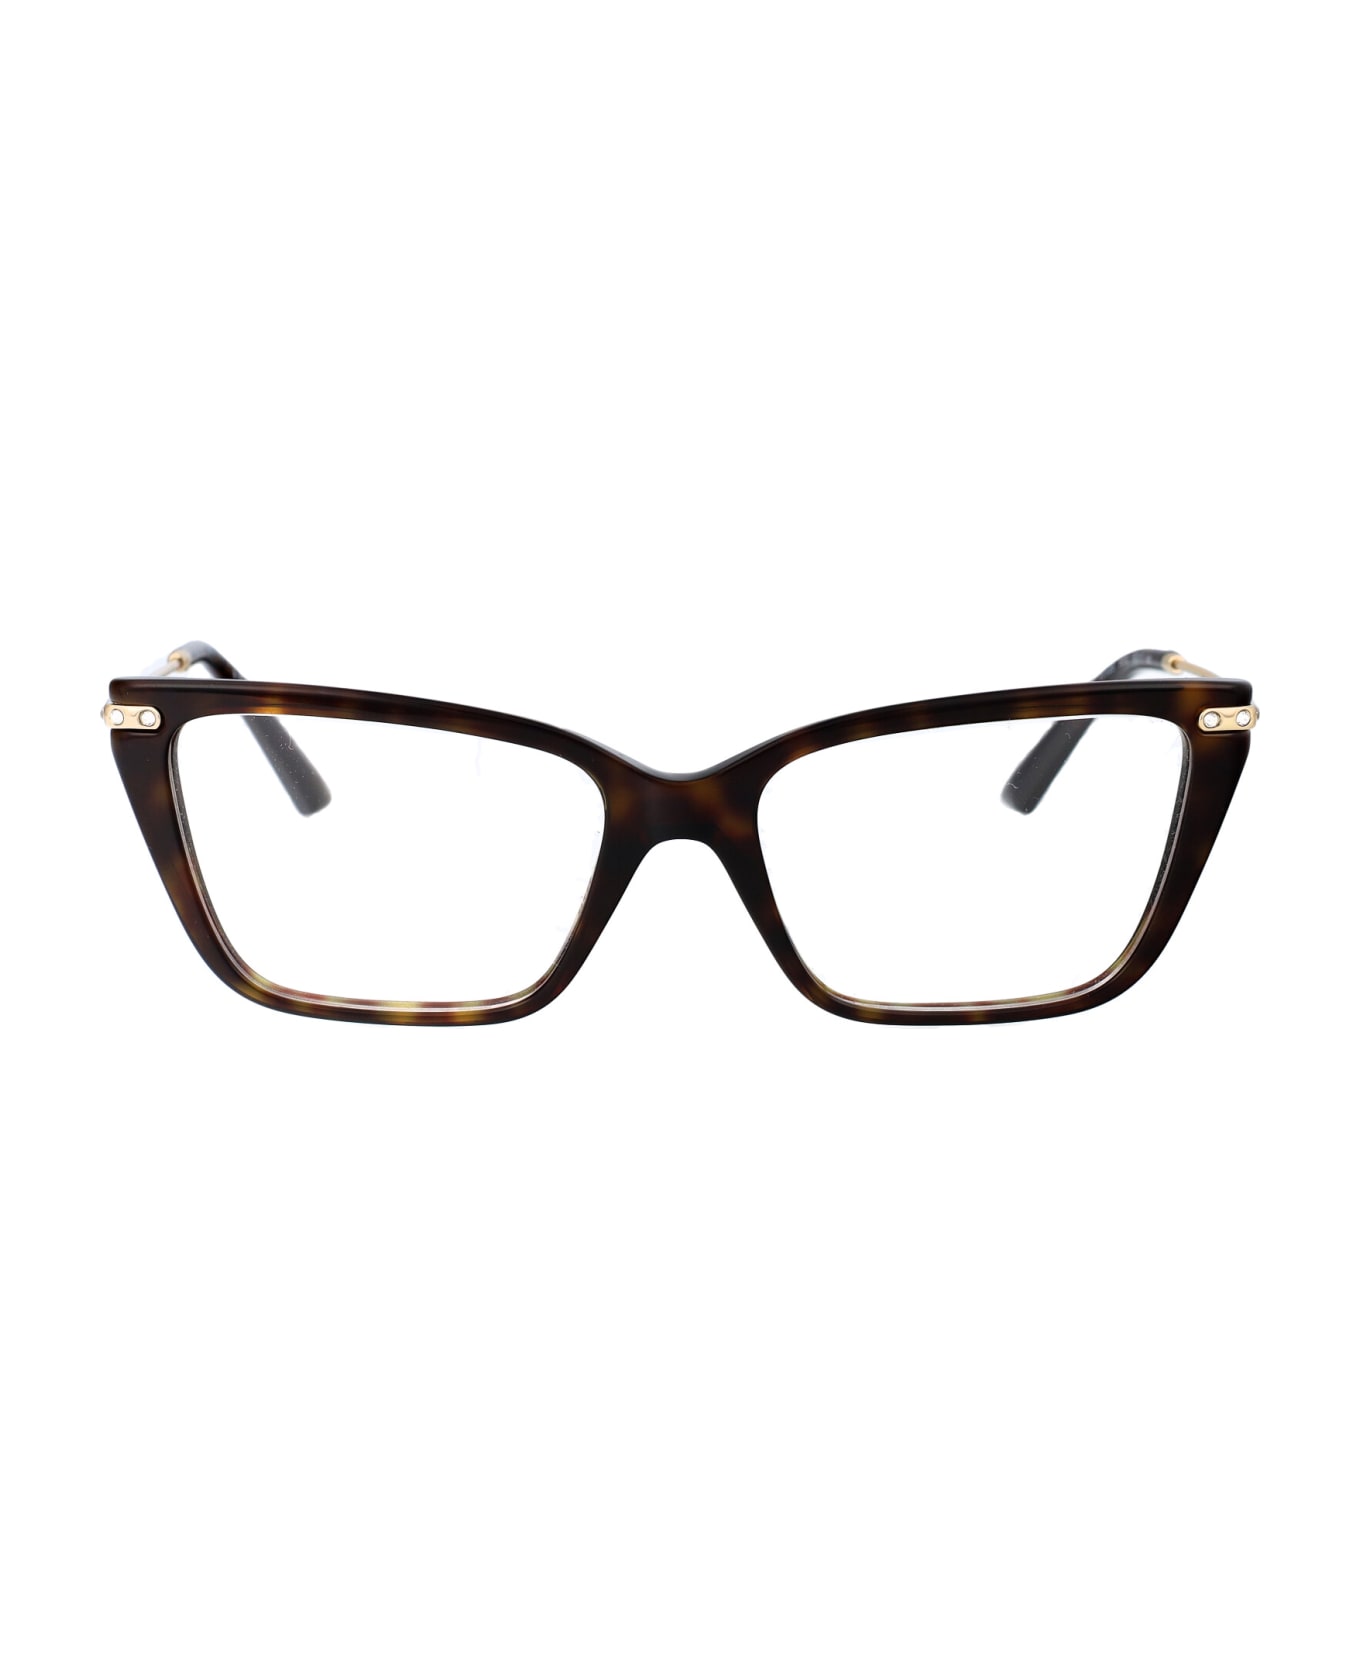 Jimmy Choo Eyewear 0jc3002b Glasses - 5002 HAVANA